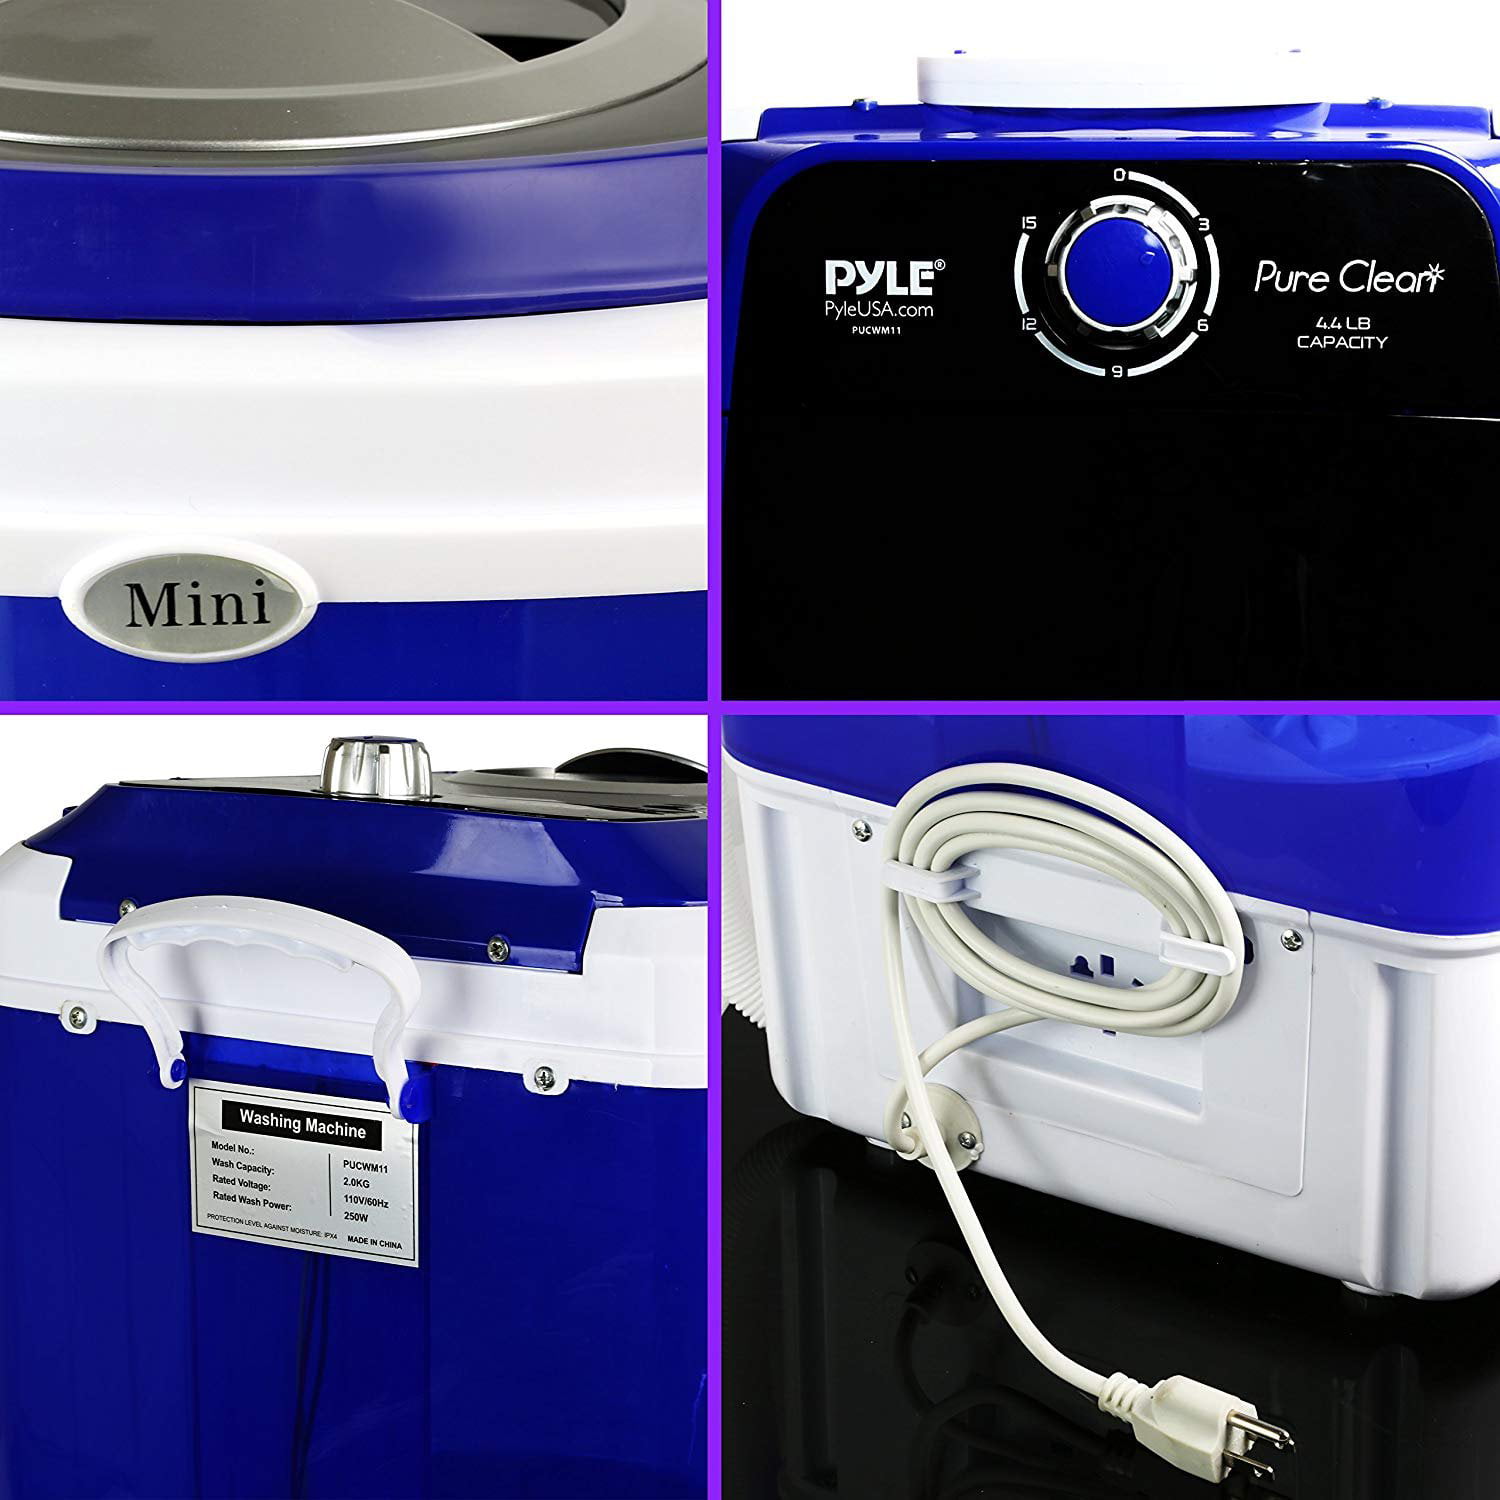 Pyle Mini Portable Washing Machine, Size: Small, Blue